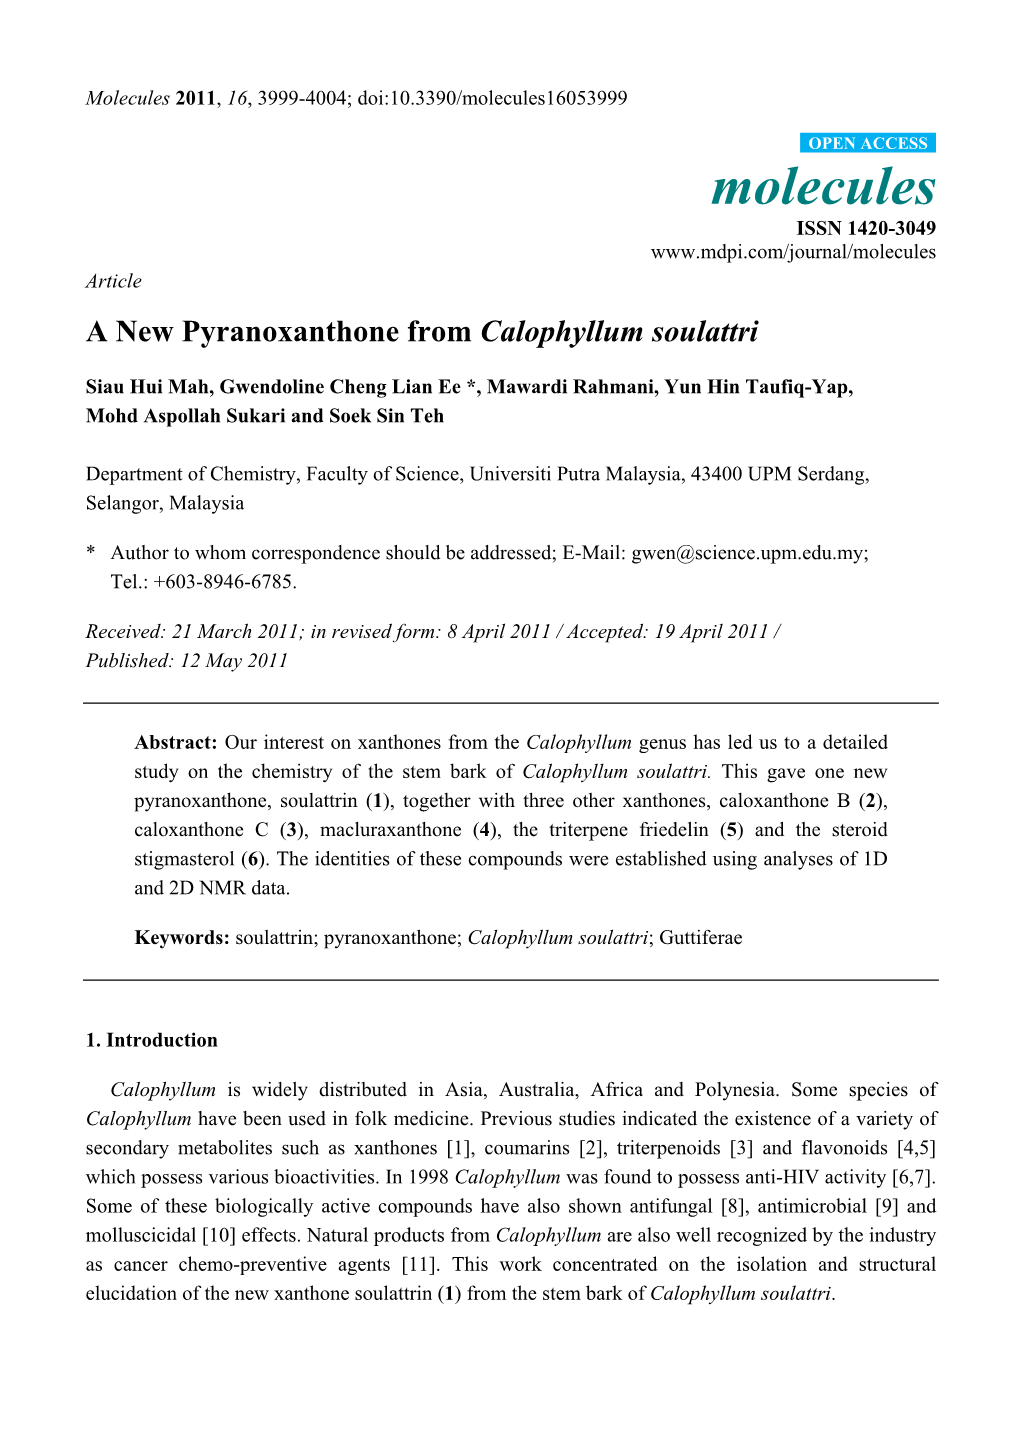 A New Pyranoxanthone from Calophyllum Soulattri